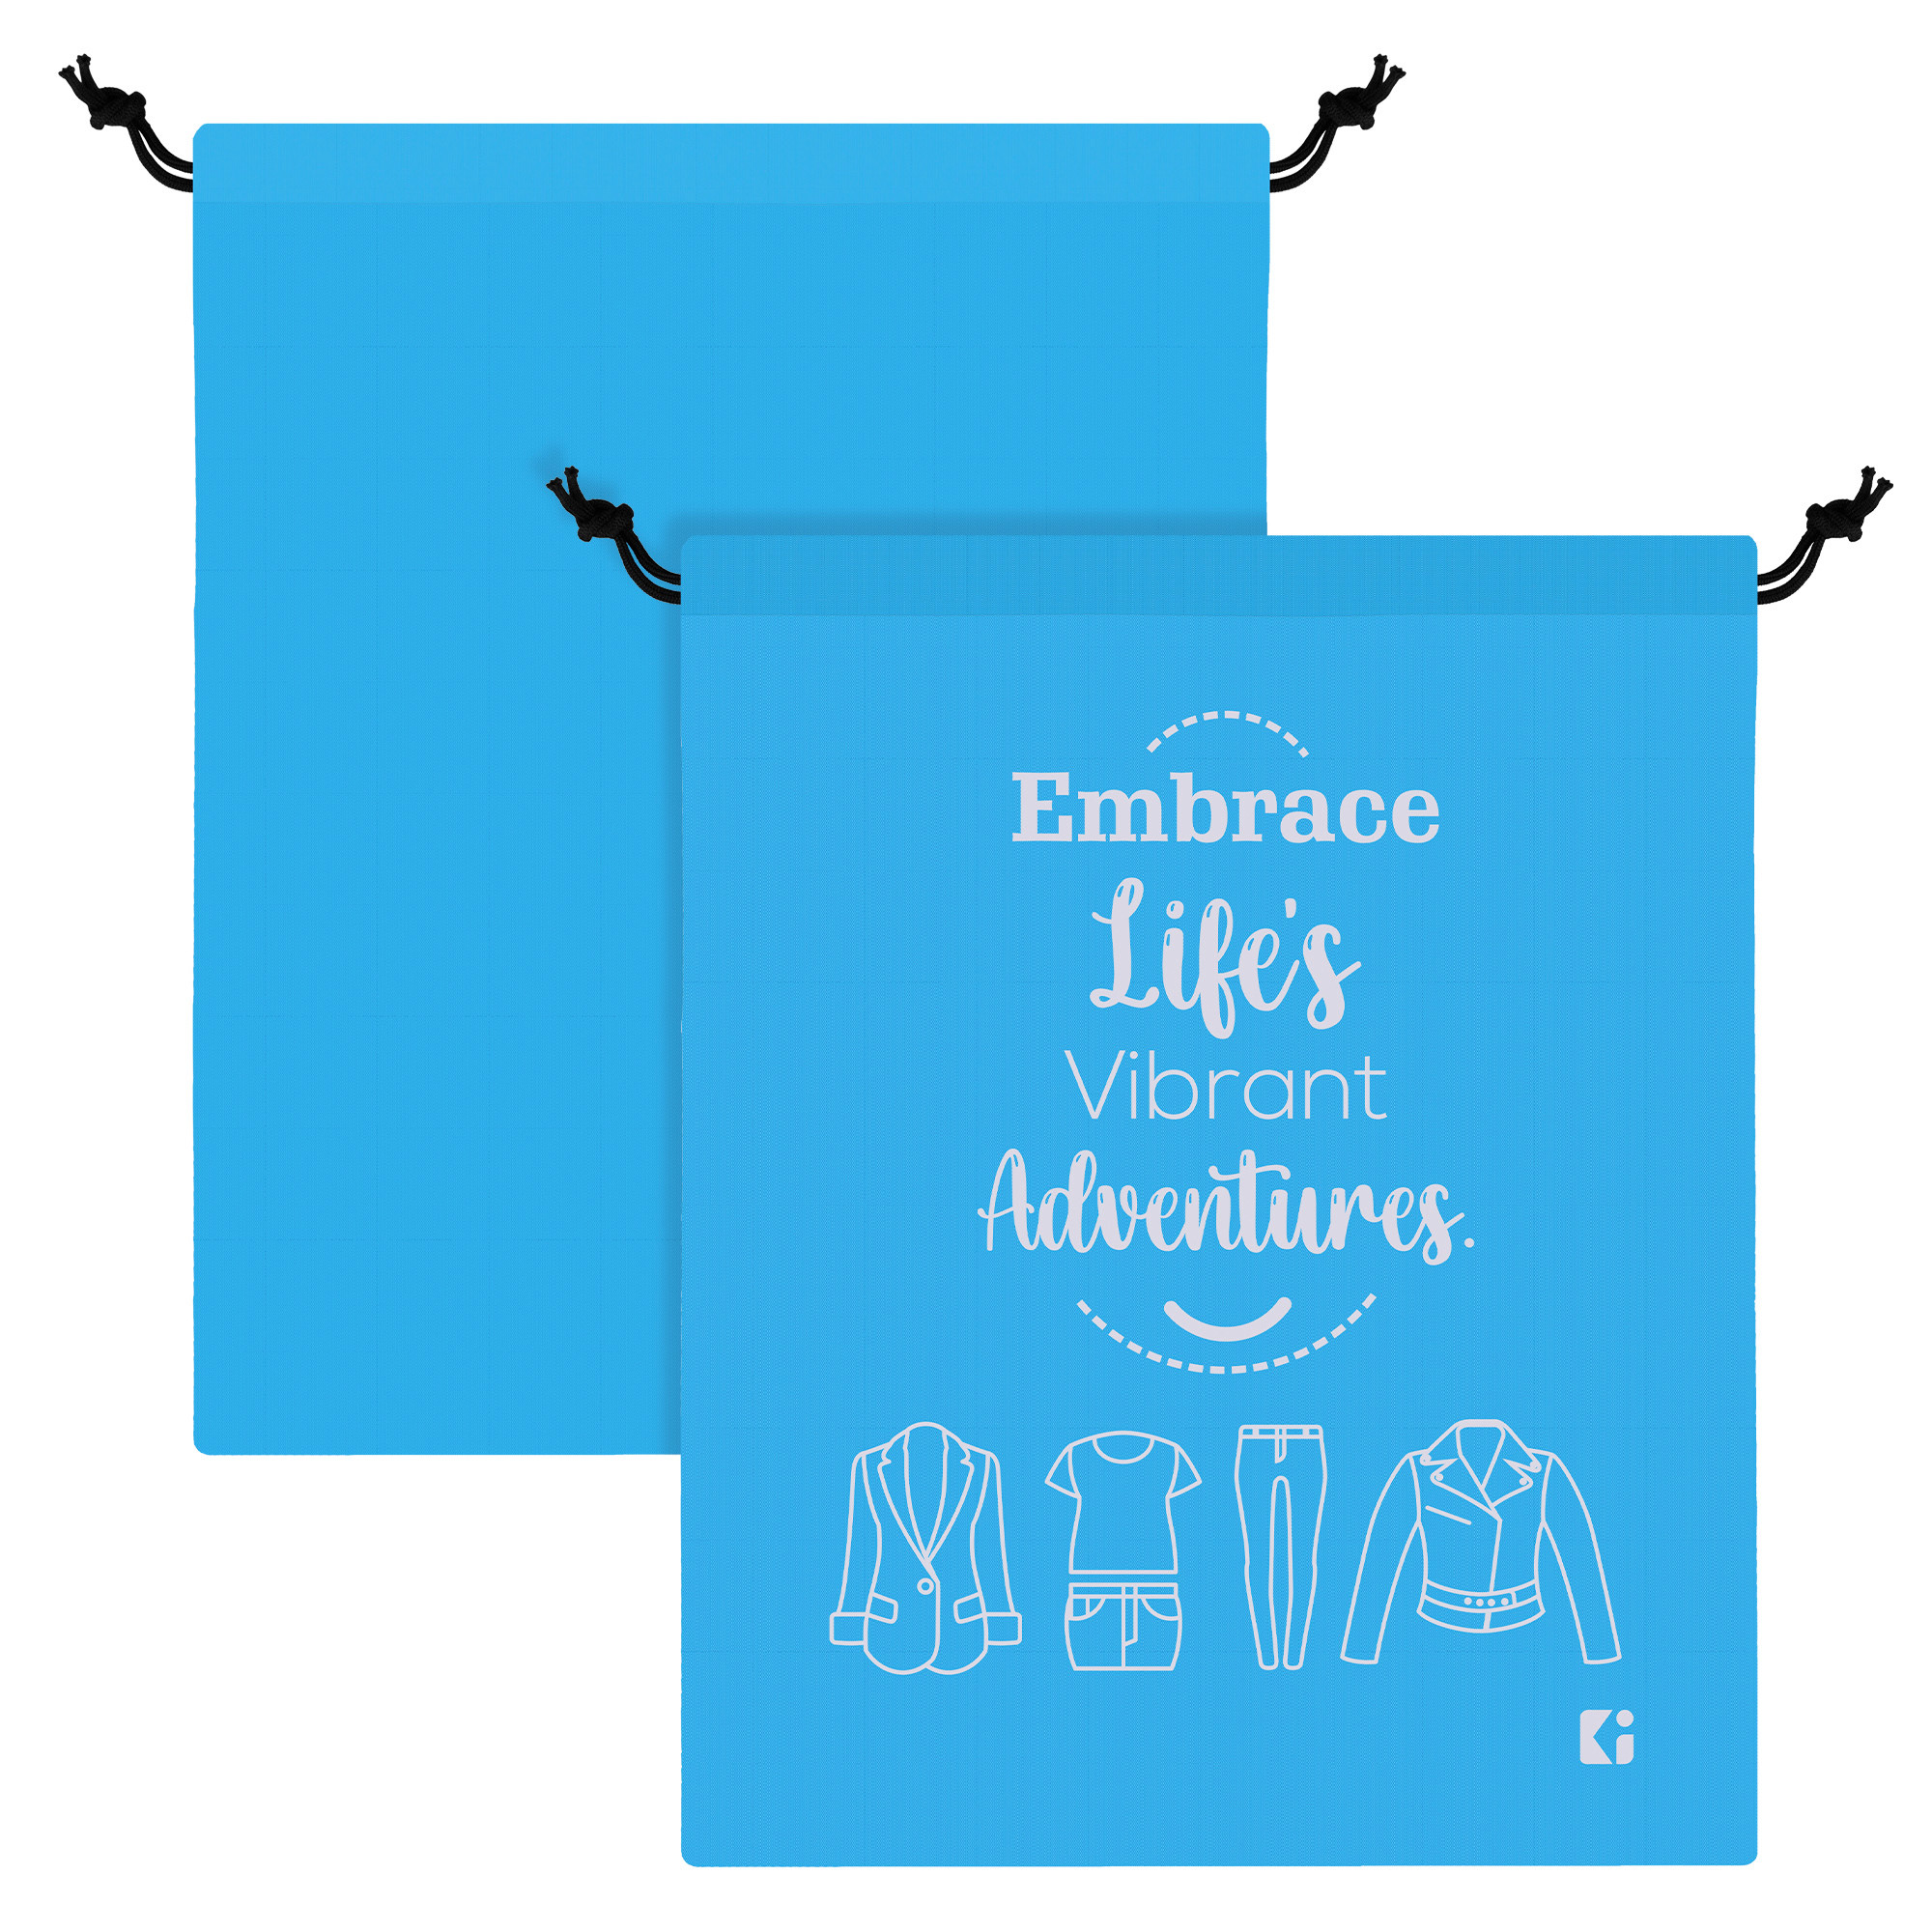 Kuber Industries Cloth Storage Bag | Storage Organizer | Travel Cloth Carrying Bag | Garments Cover for Laundry | Travel Storage Organizer for Clothing | Medium | Sky Blue & Gray